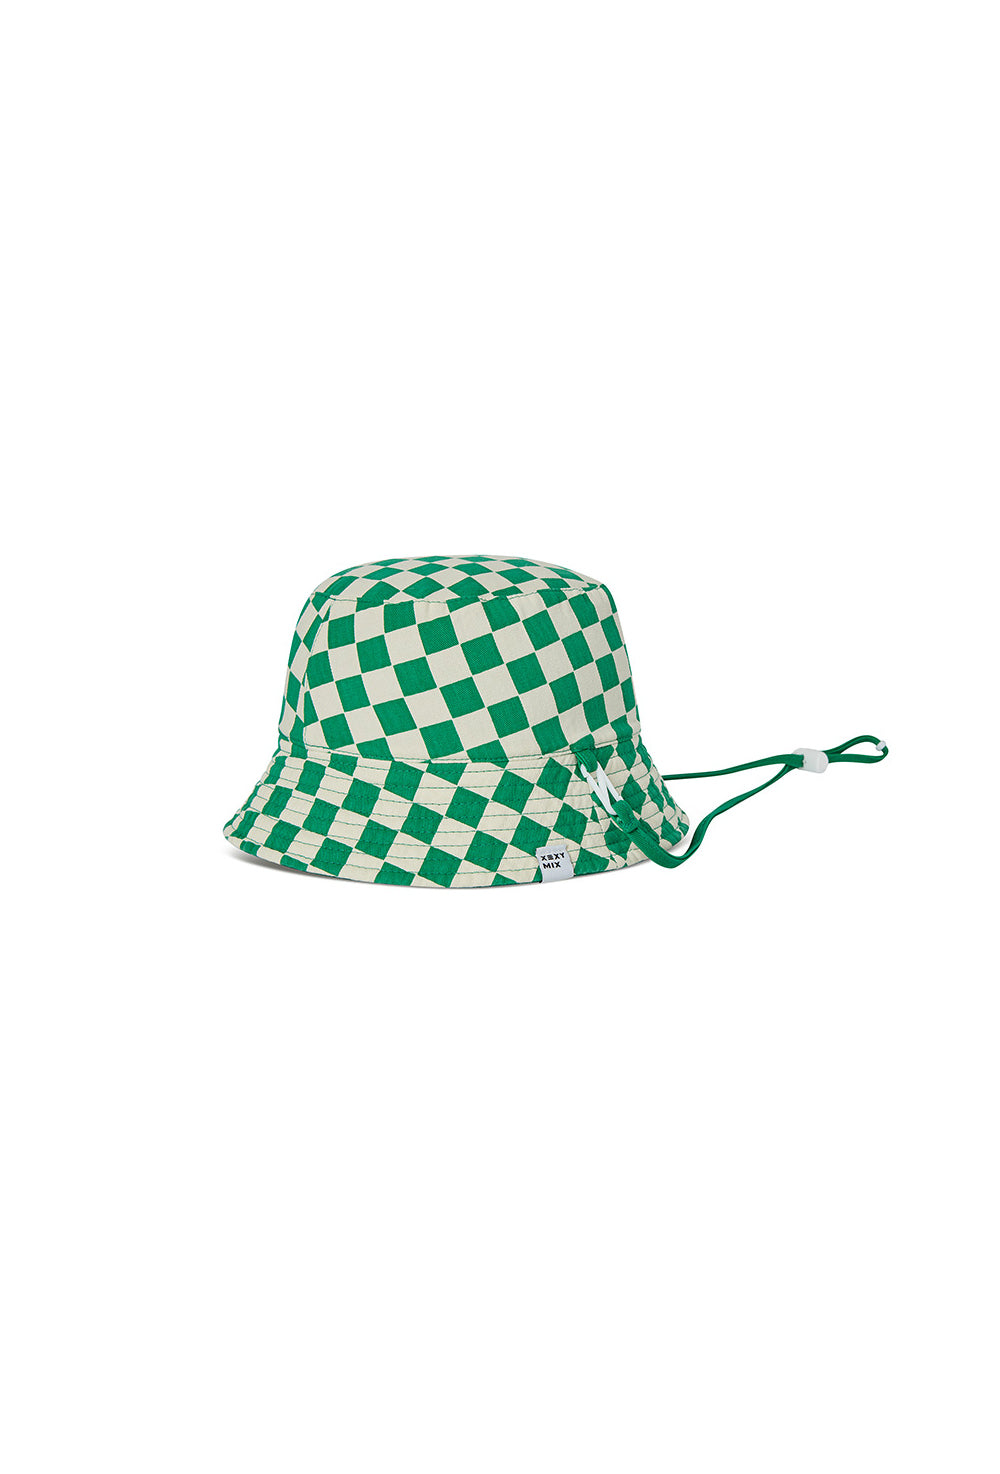 Checker Reversable Bucket Hat - Forest Green